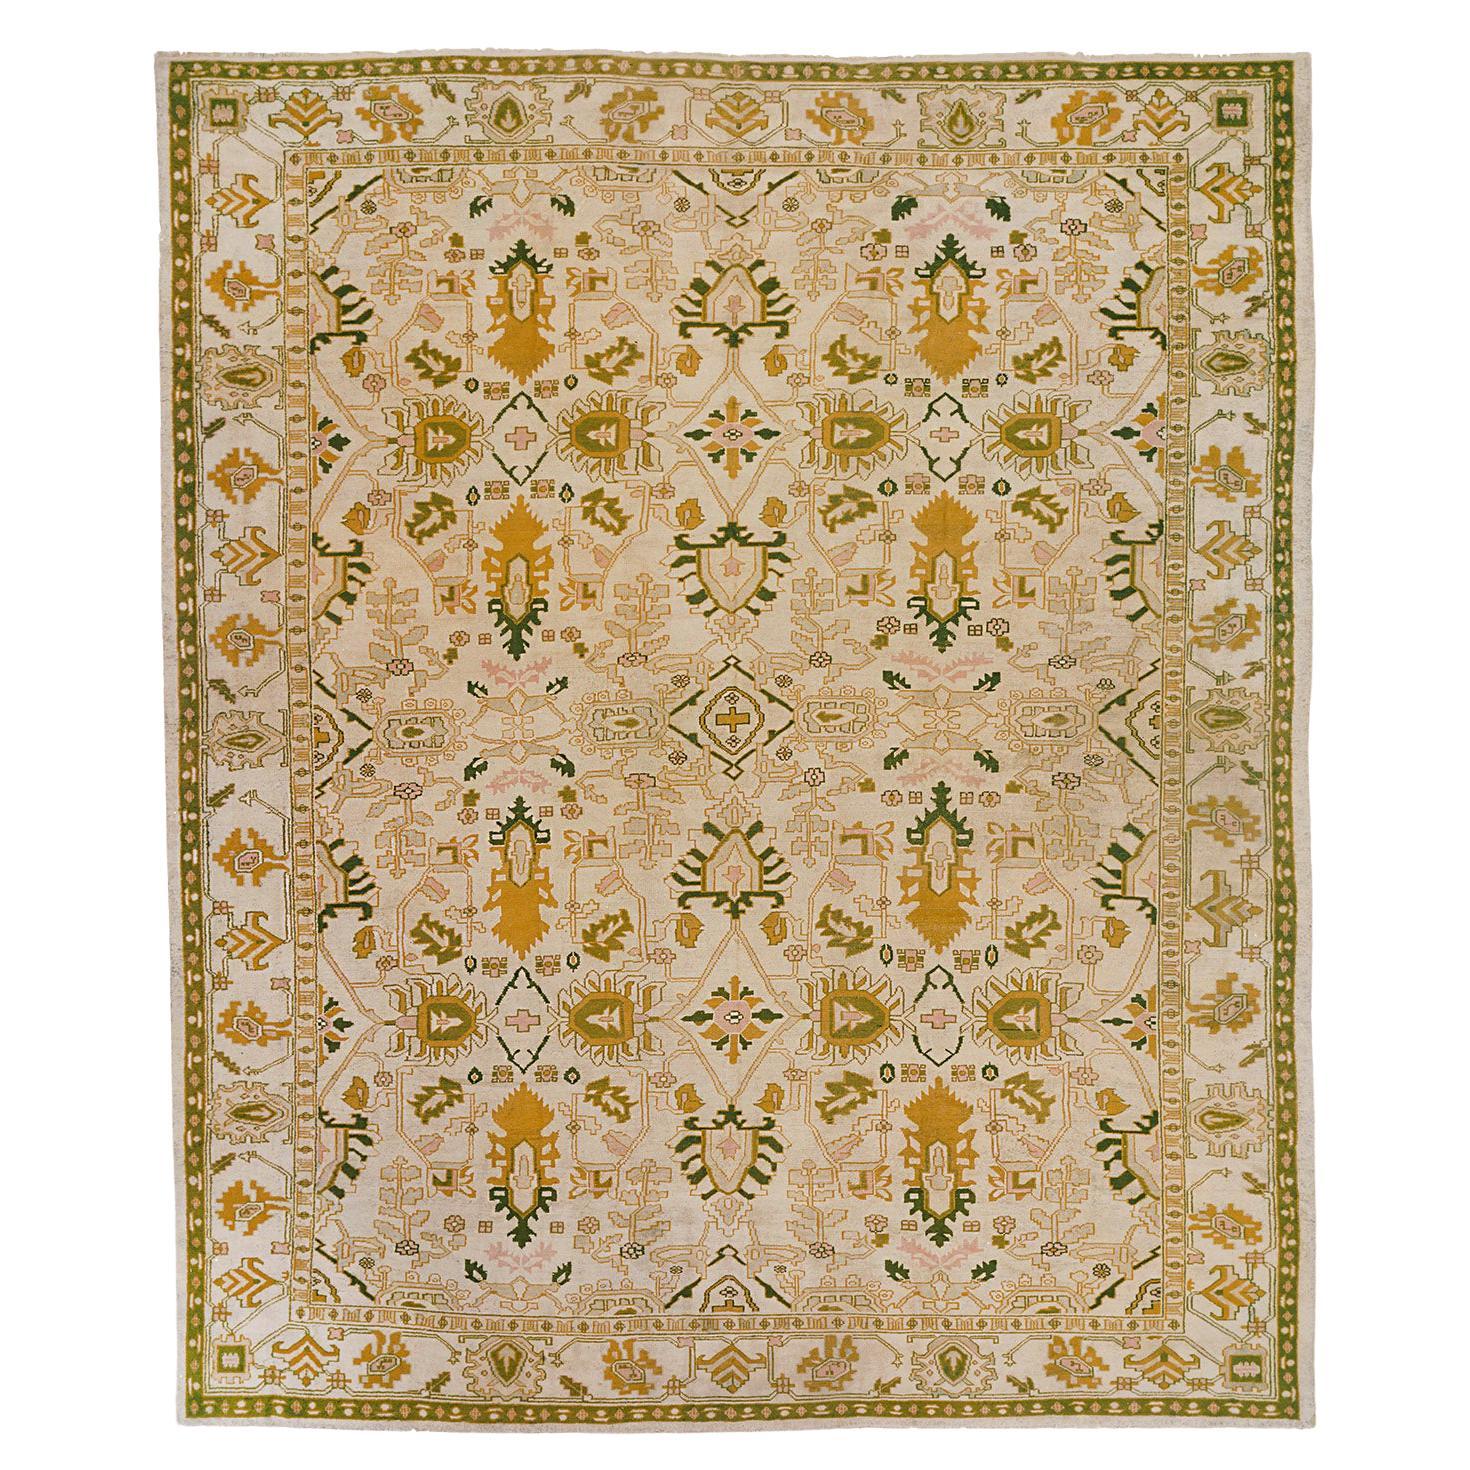 Antiker Amritsar-Teppich